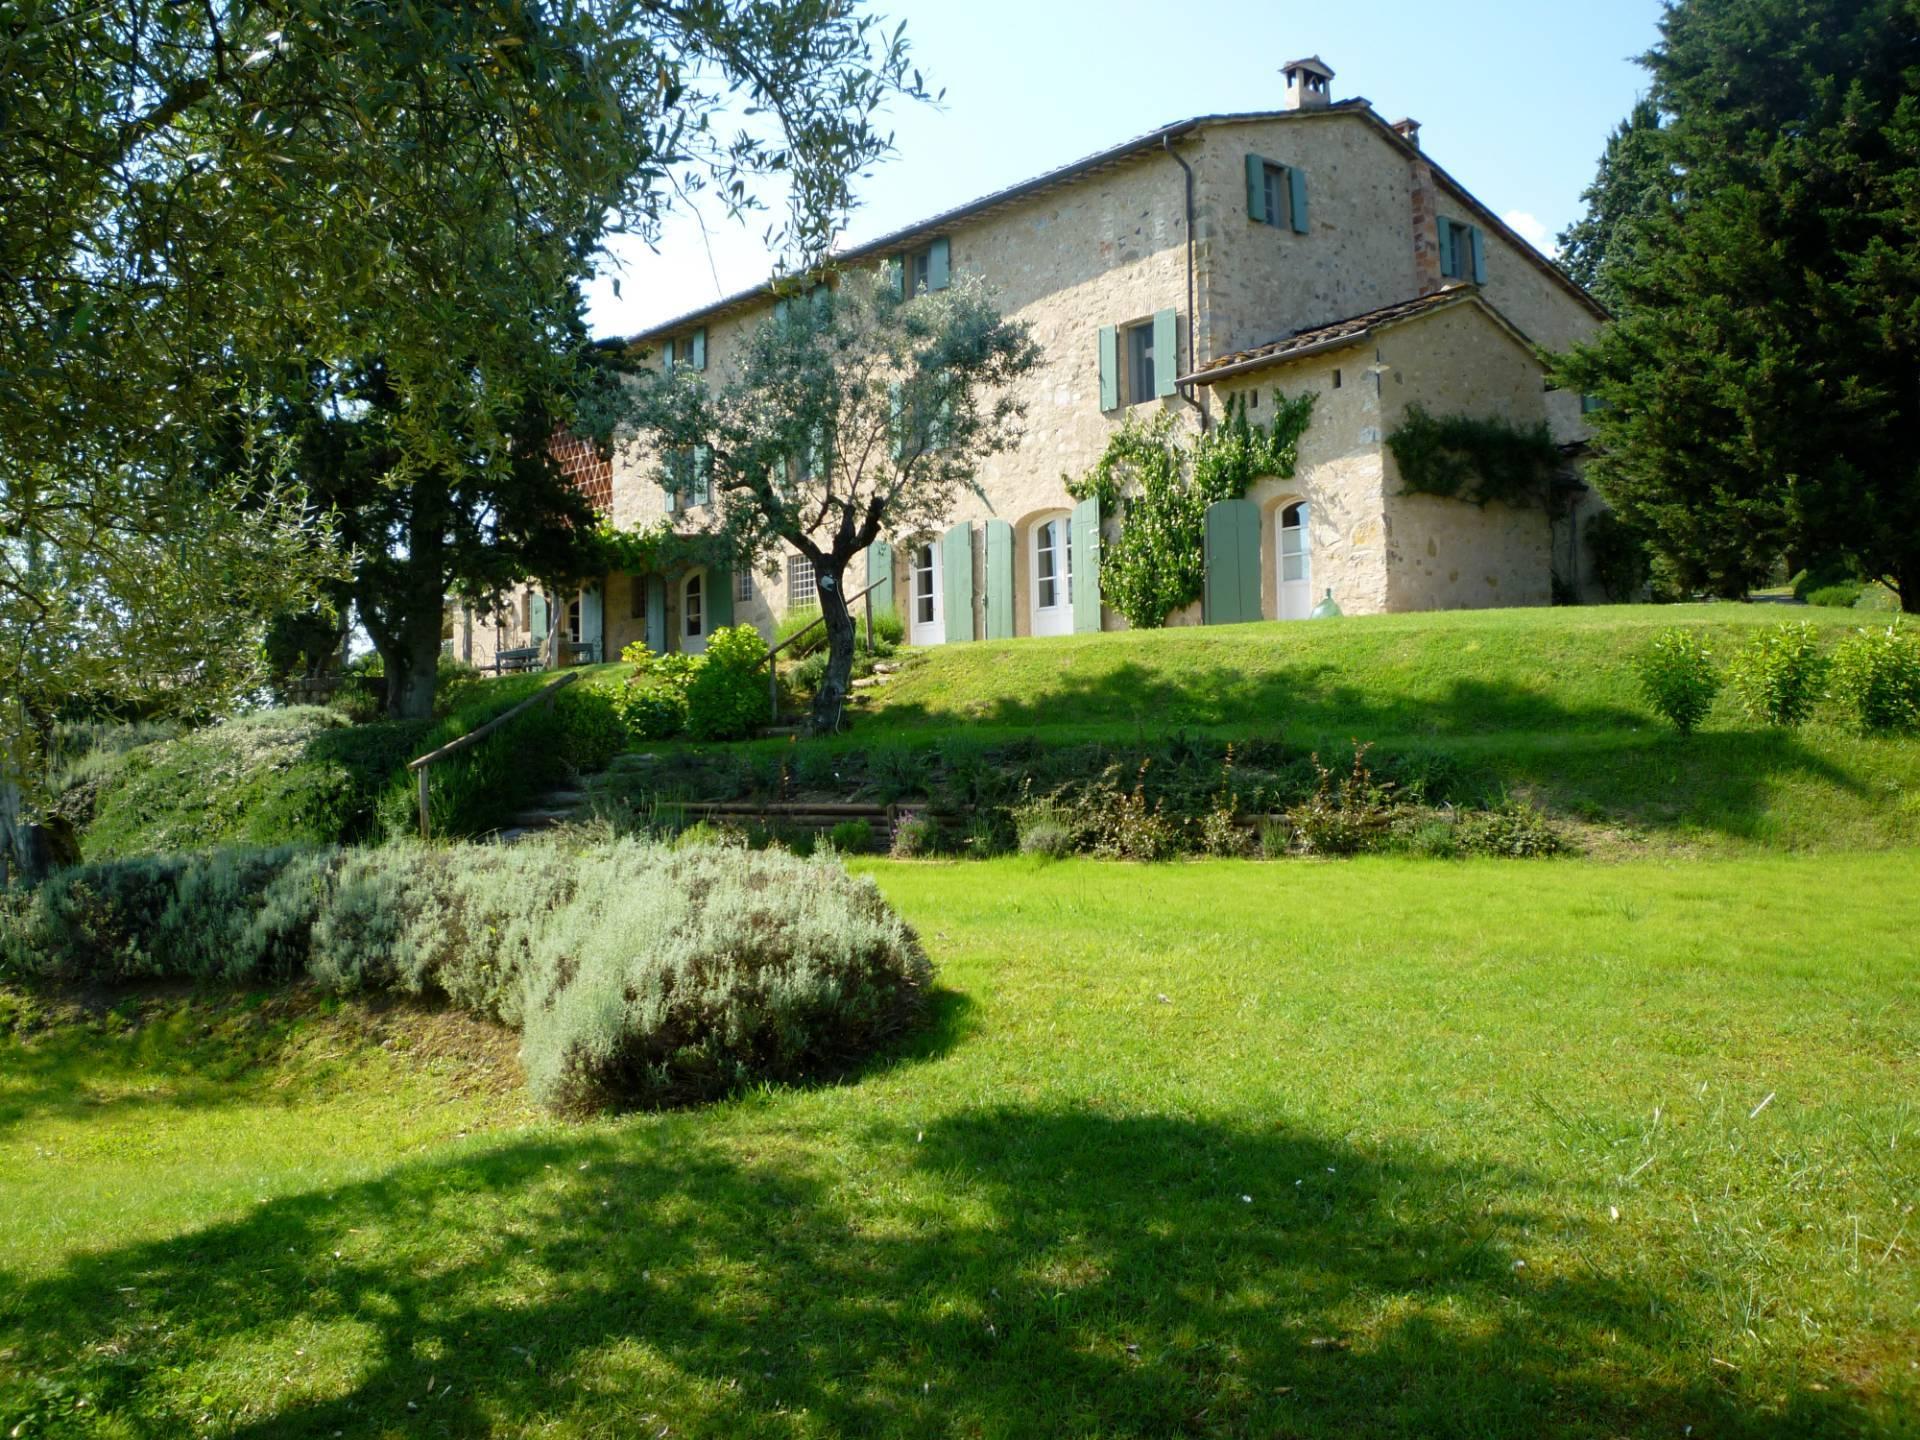 Villa Pulicara - luxurious farmhouse in the Tuscan countryside - 1